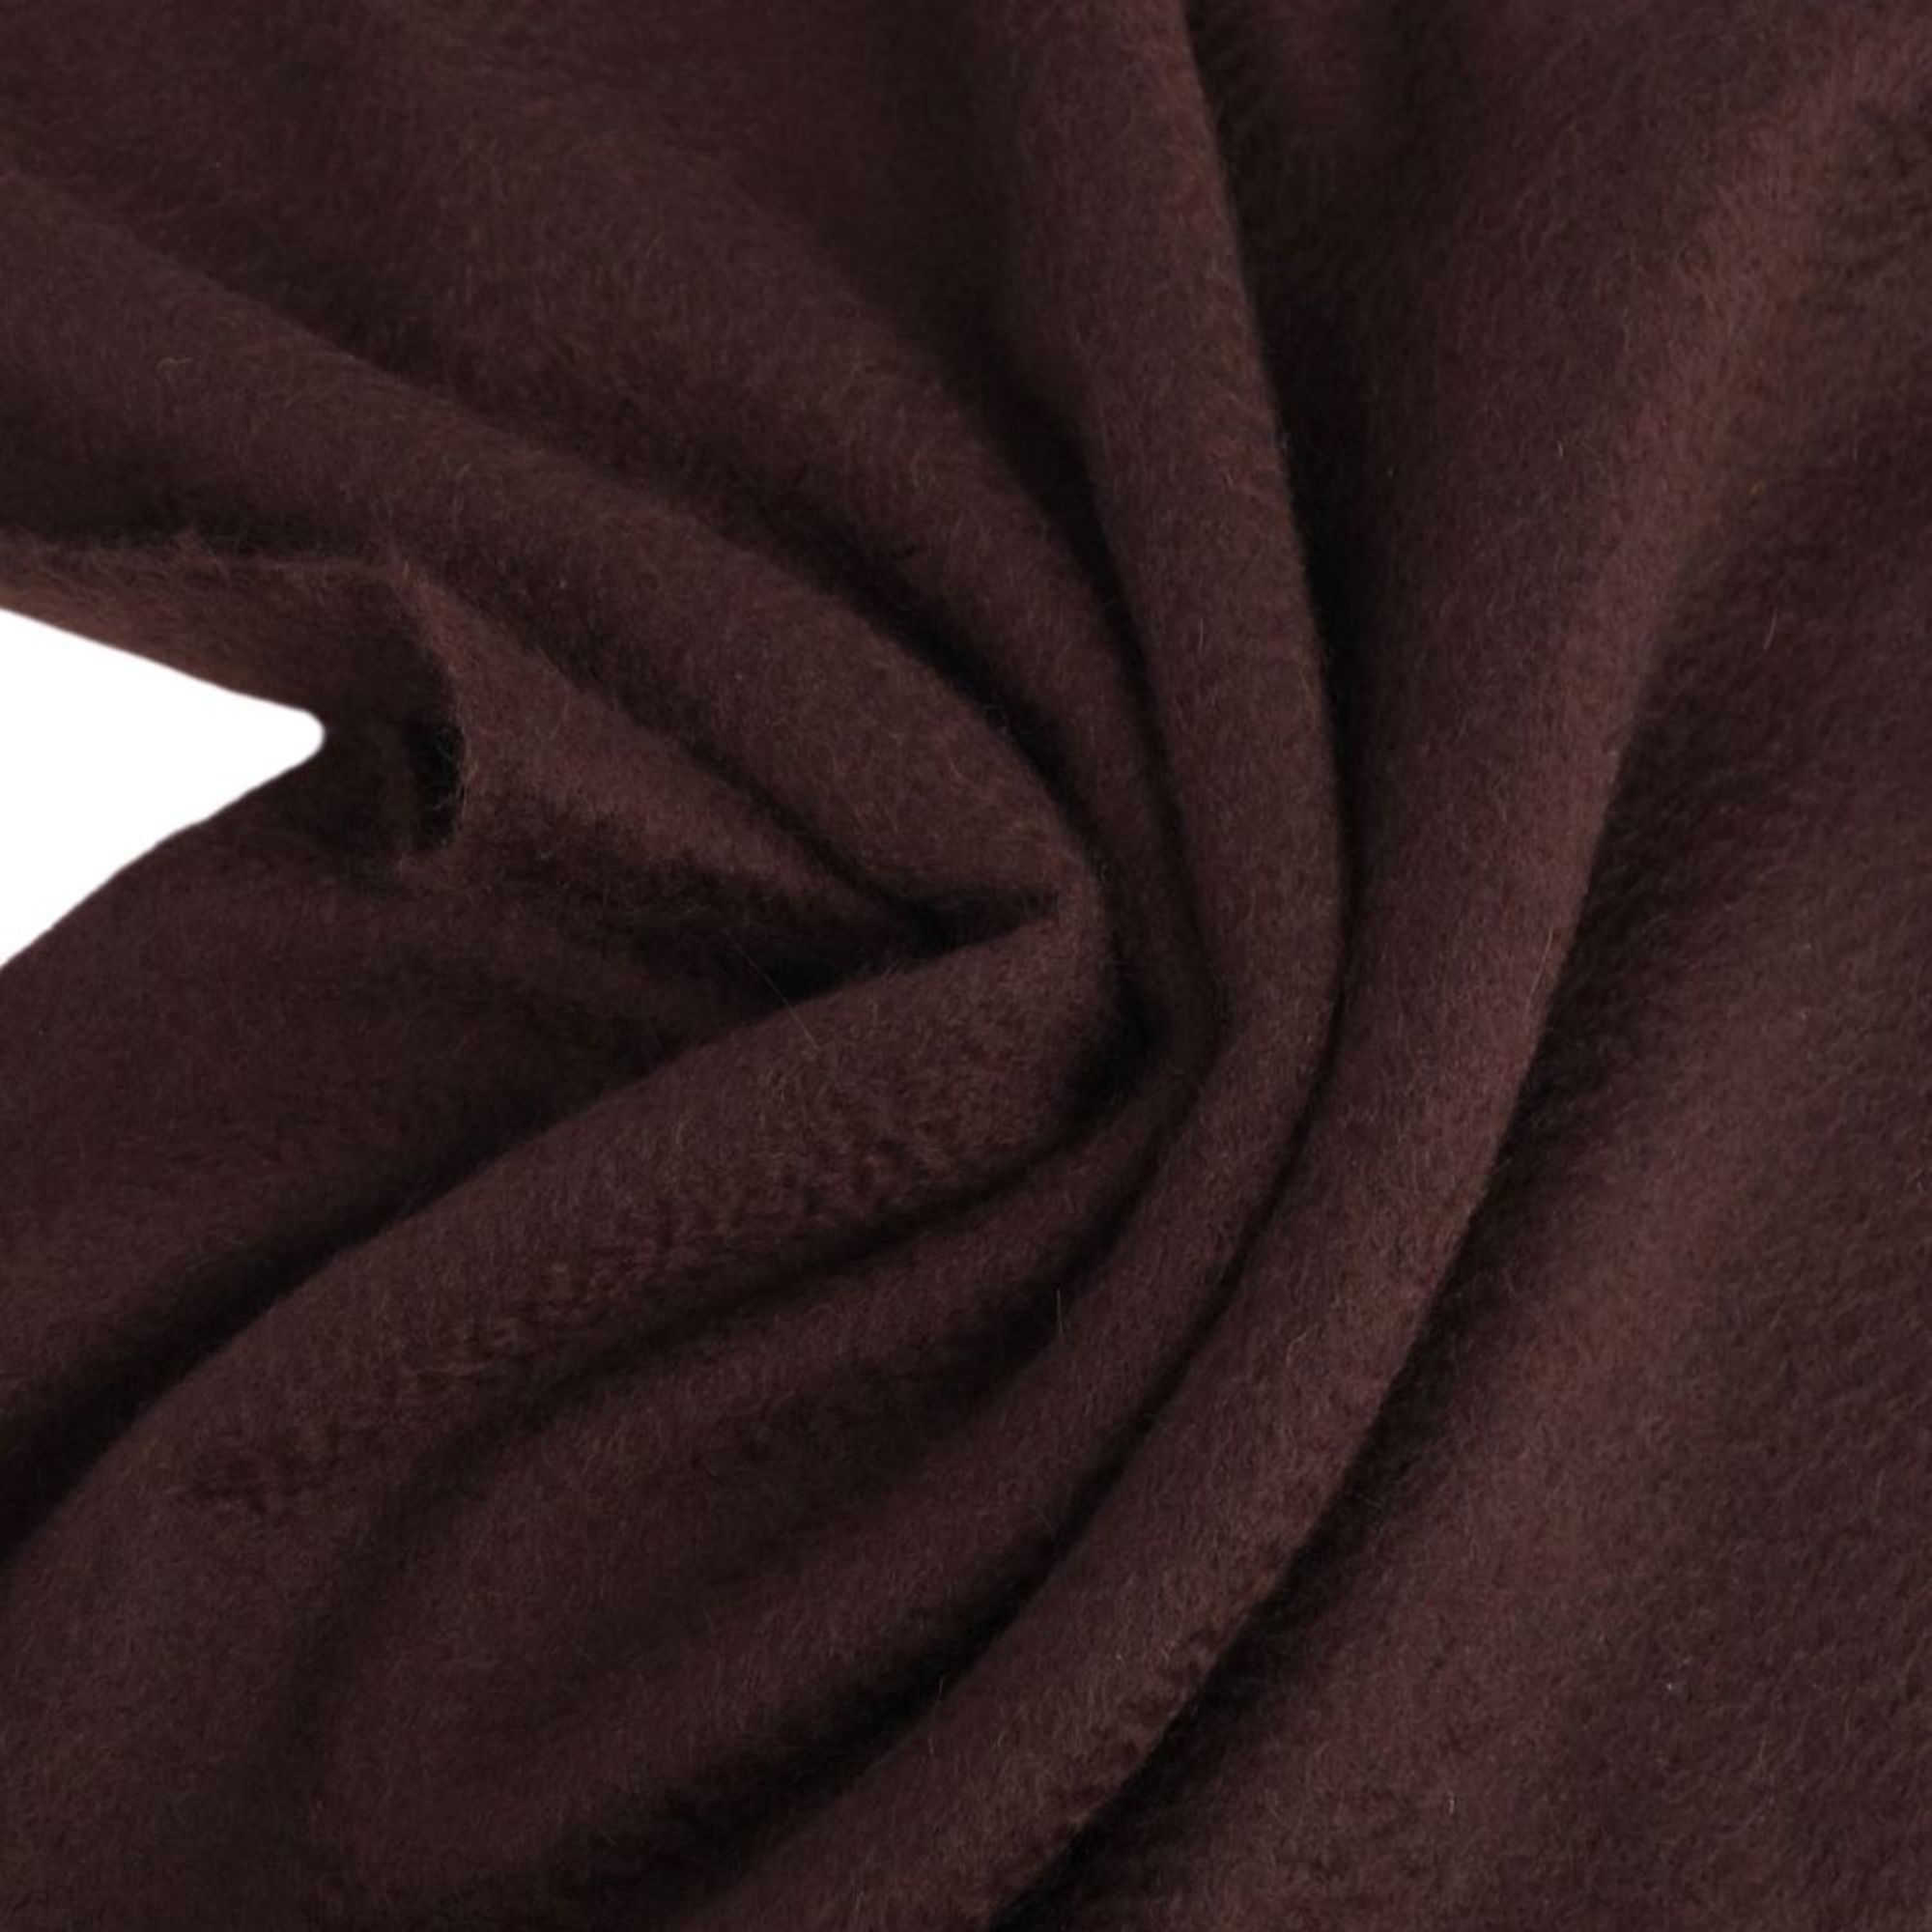 HERMES scarf 100% cashmere embroidery men's women's dark brown